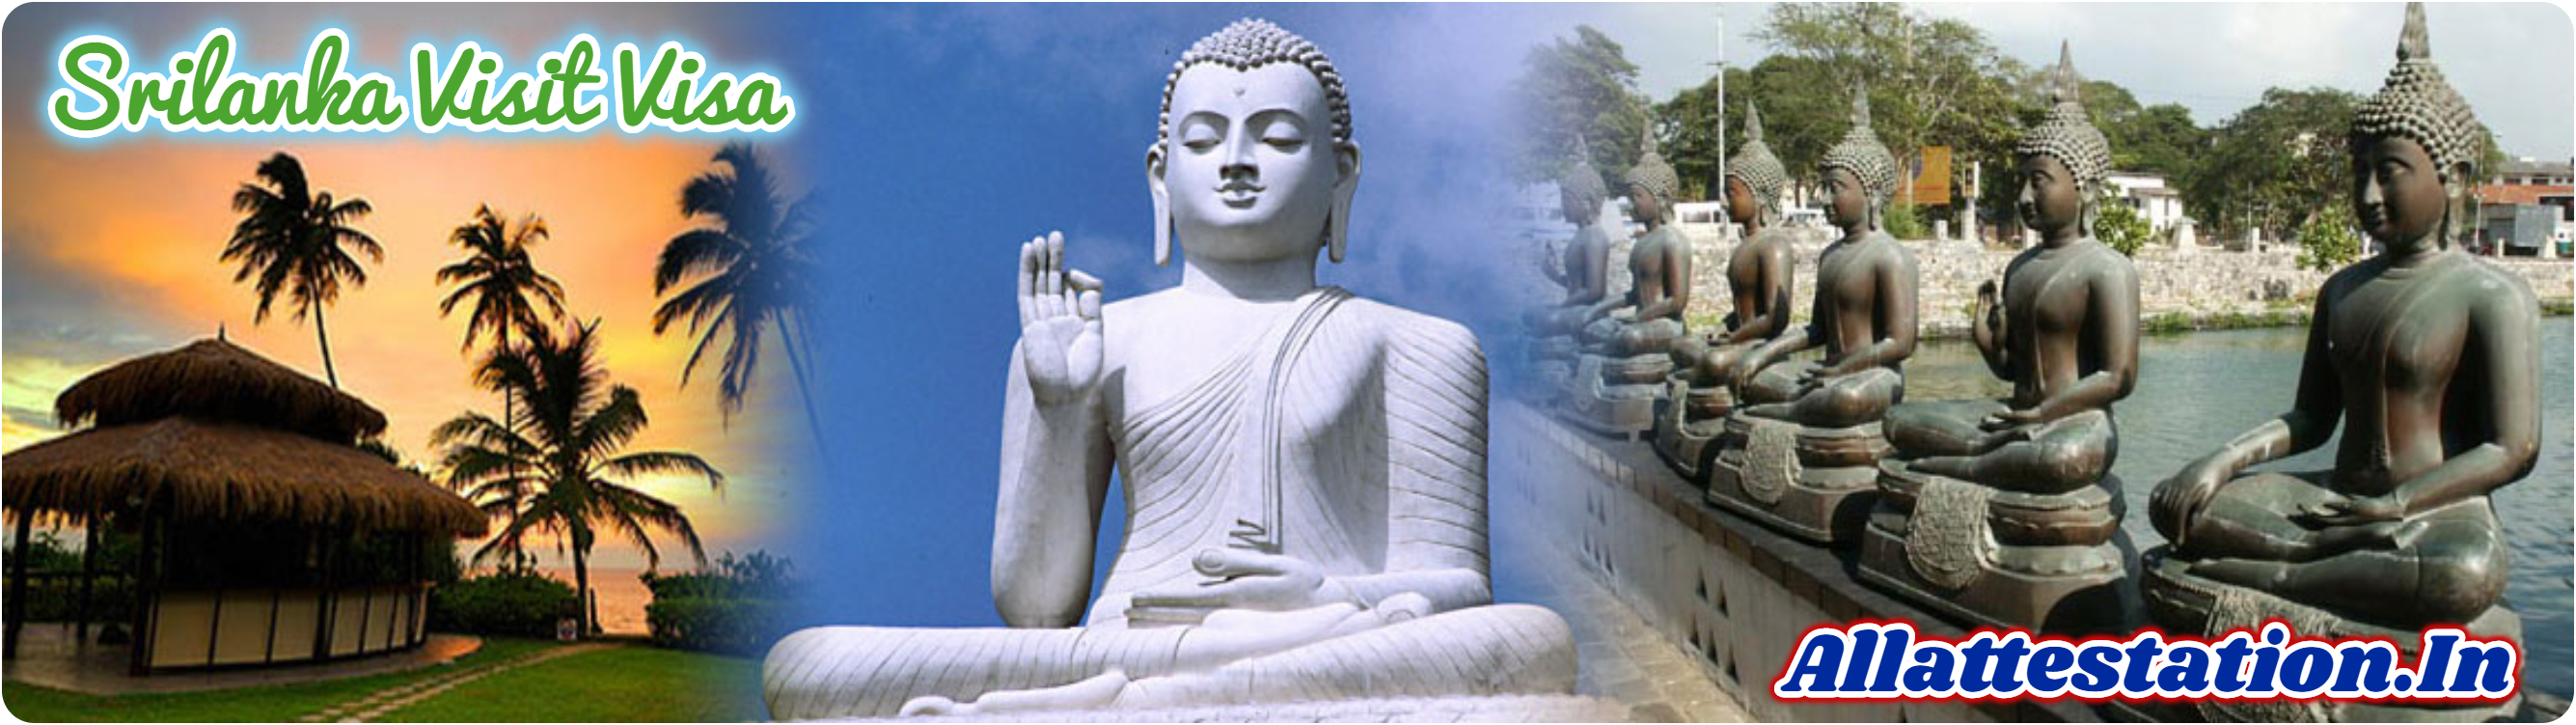 Srilanka-Visit-Visa.html